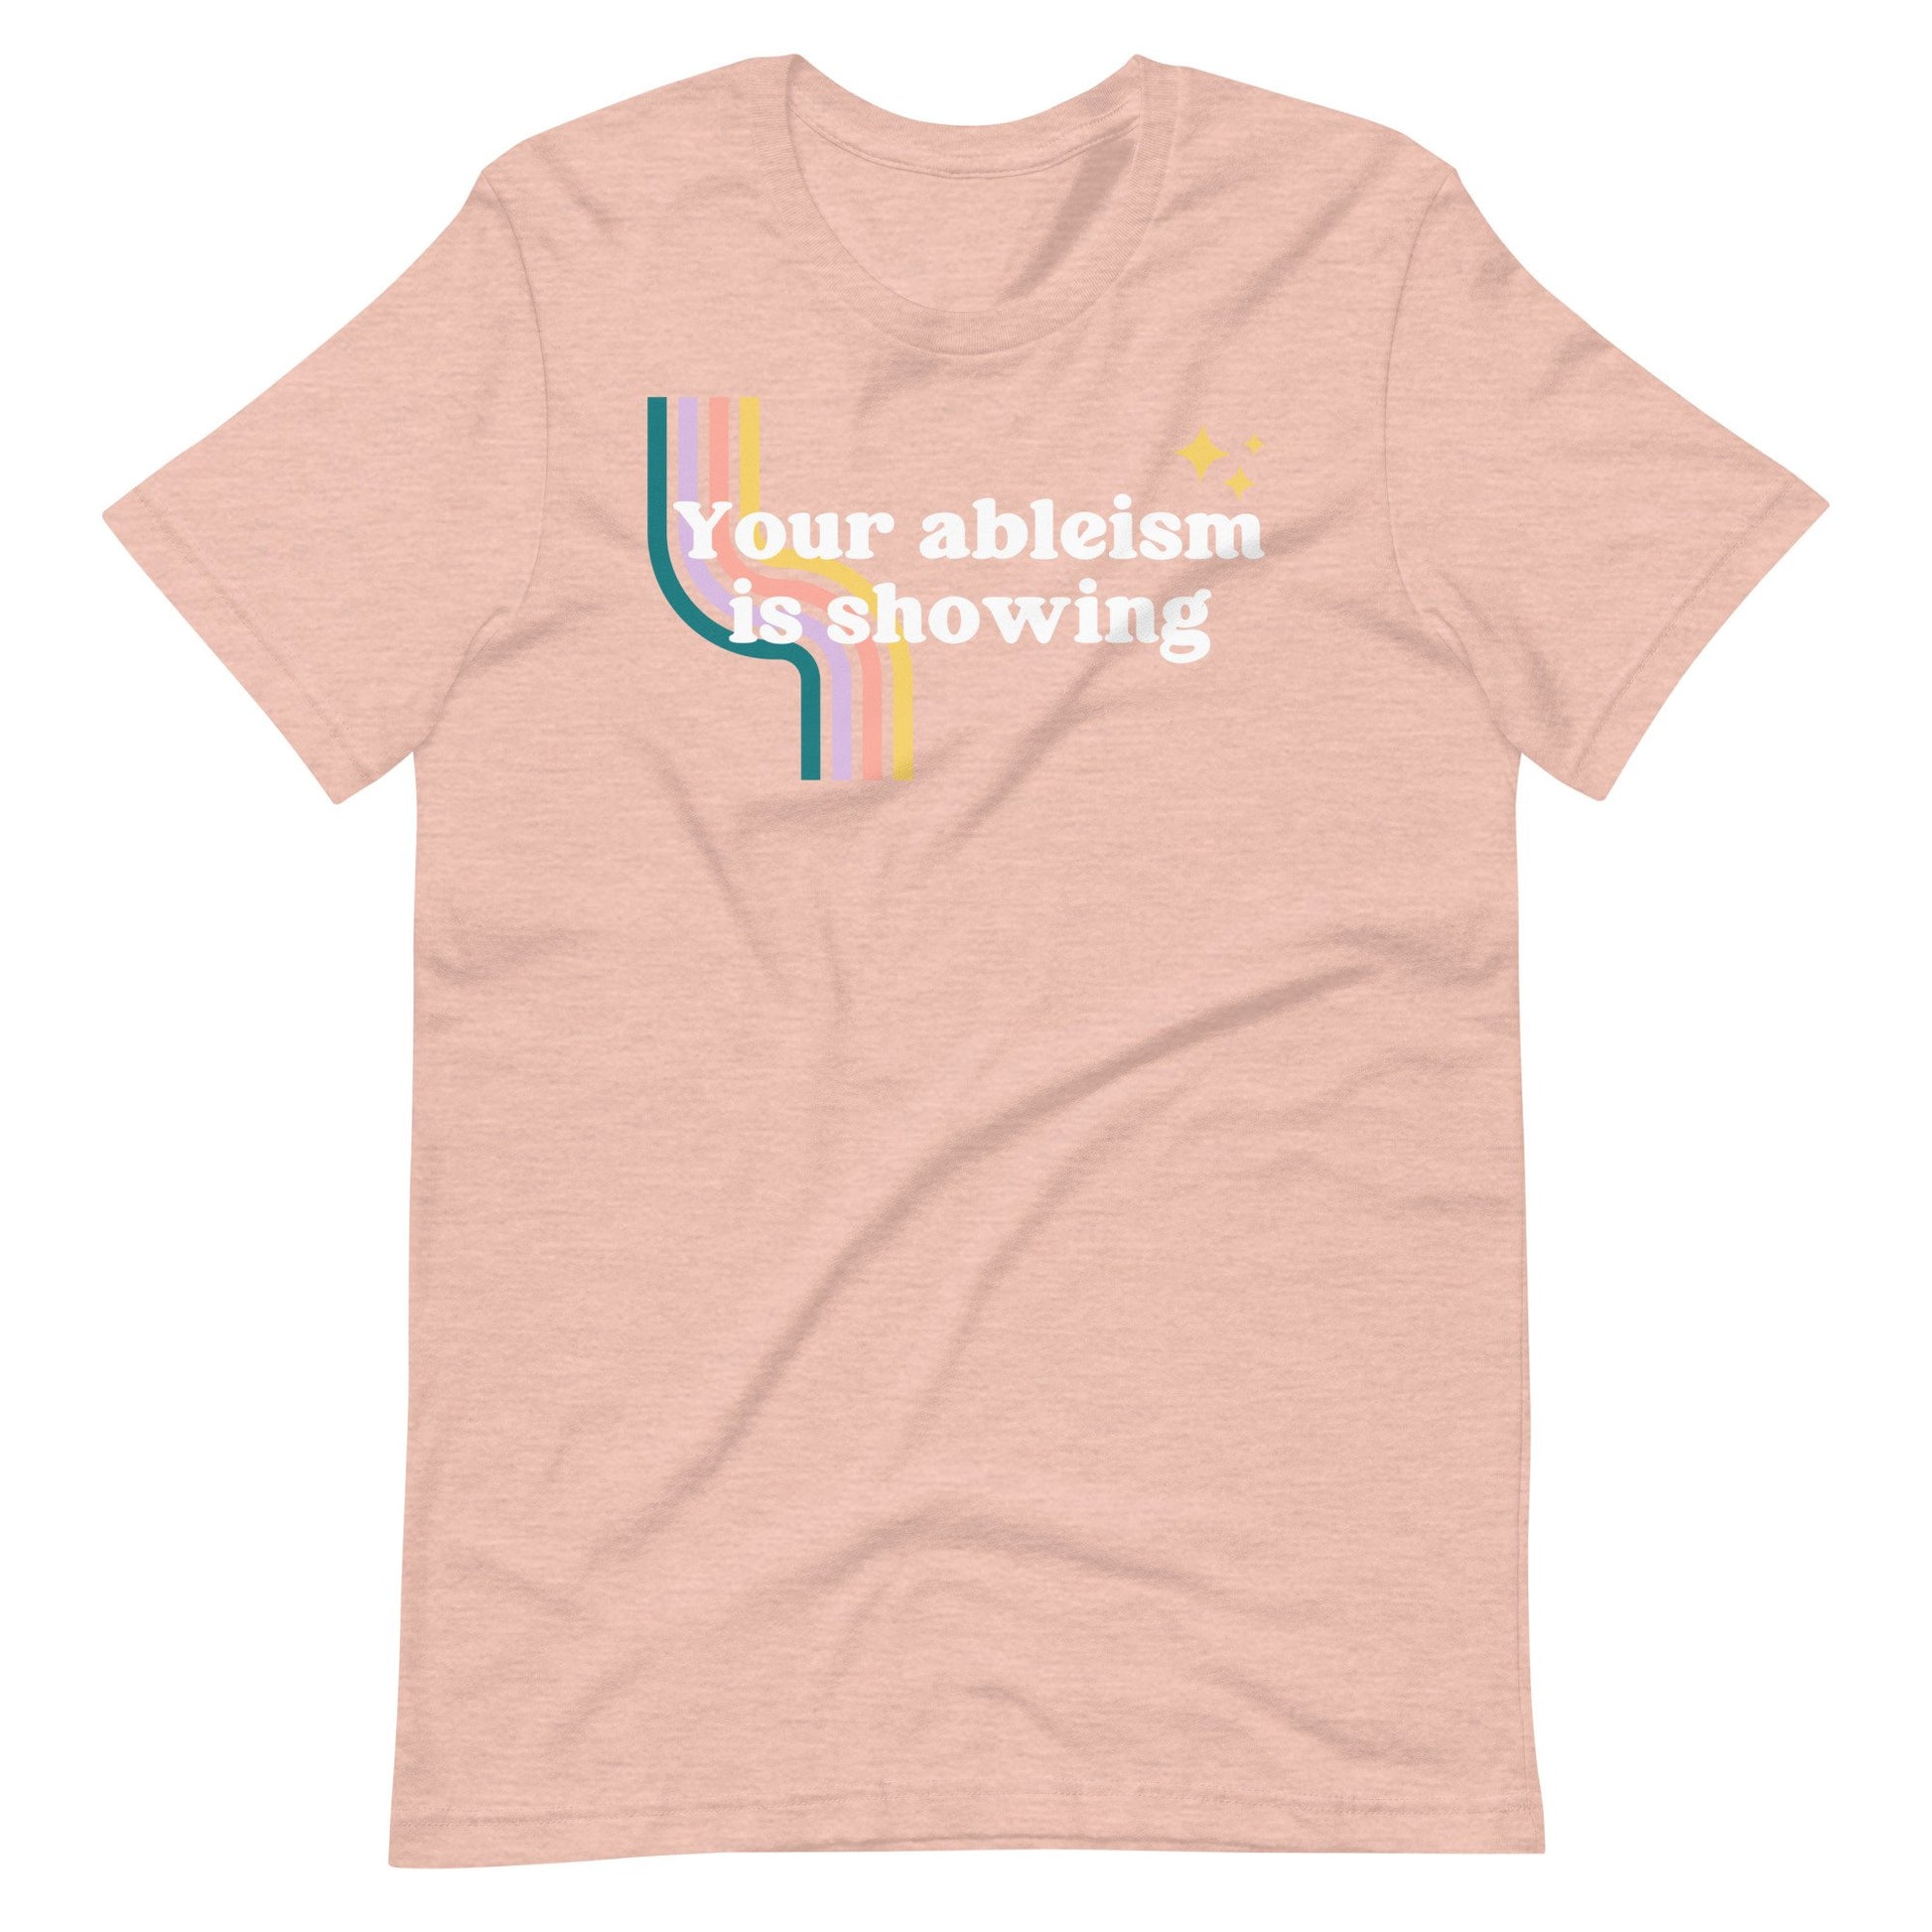 unisex-staple-t-shirt-heather-prism-peach-front-62bc81f4b9a37.jpg